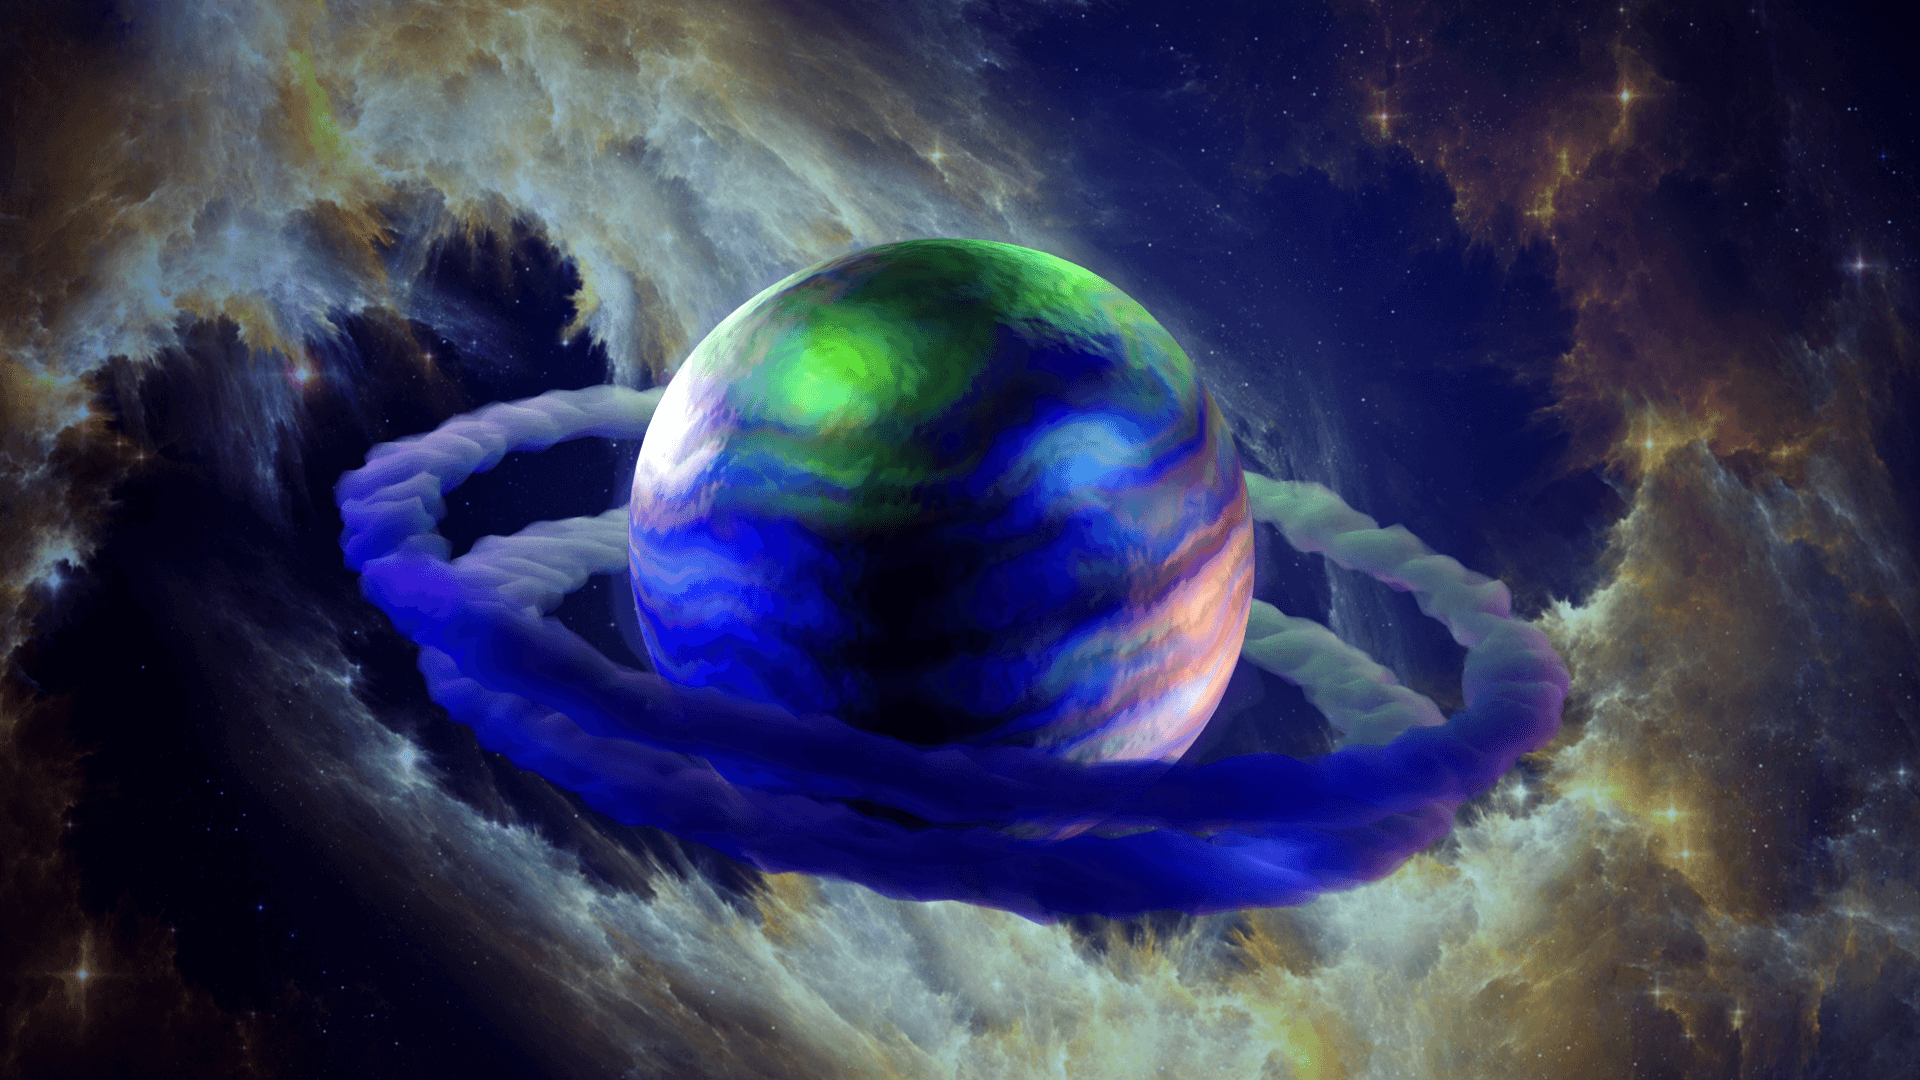 CSC Planet "OGLE-2011-BLG-0420L b" #7